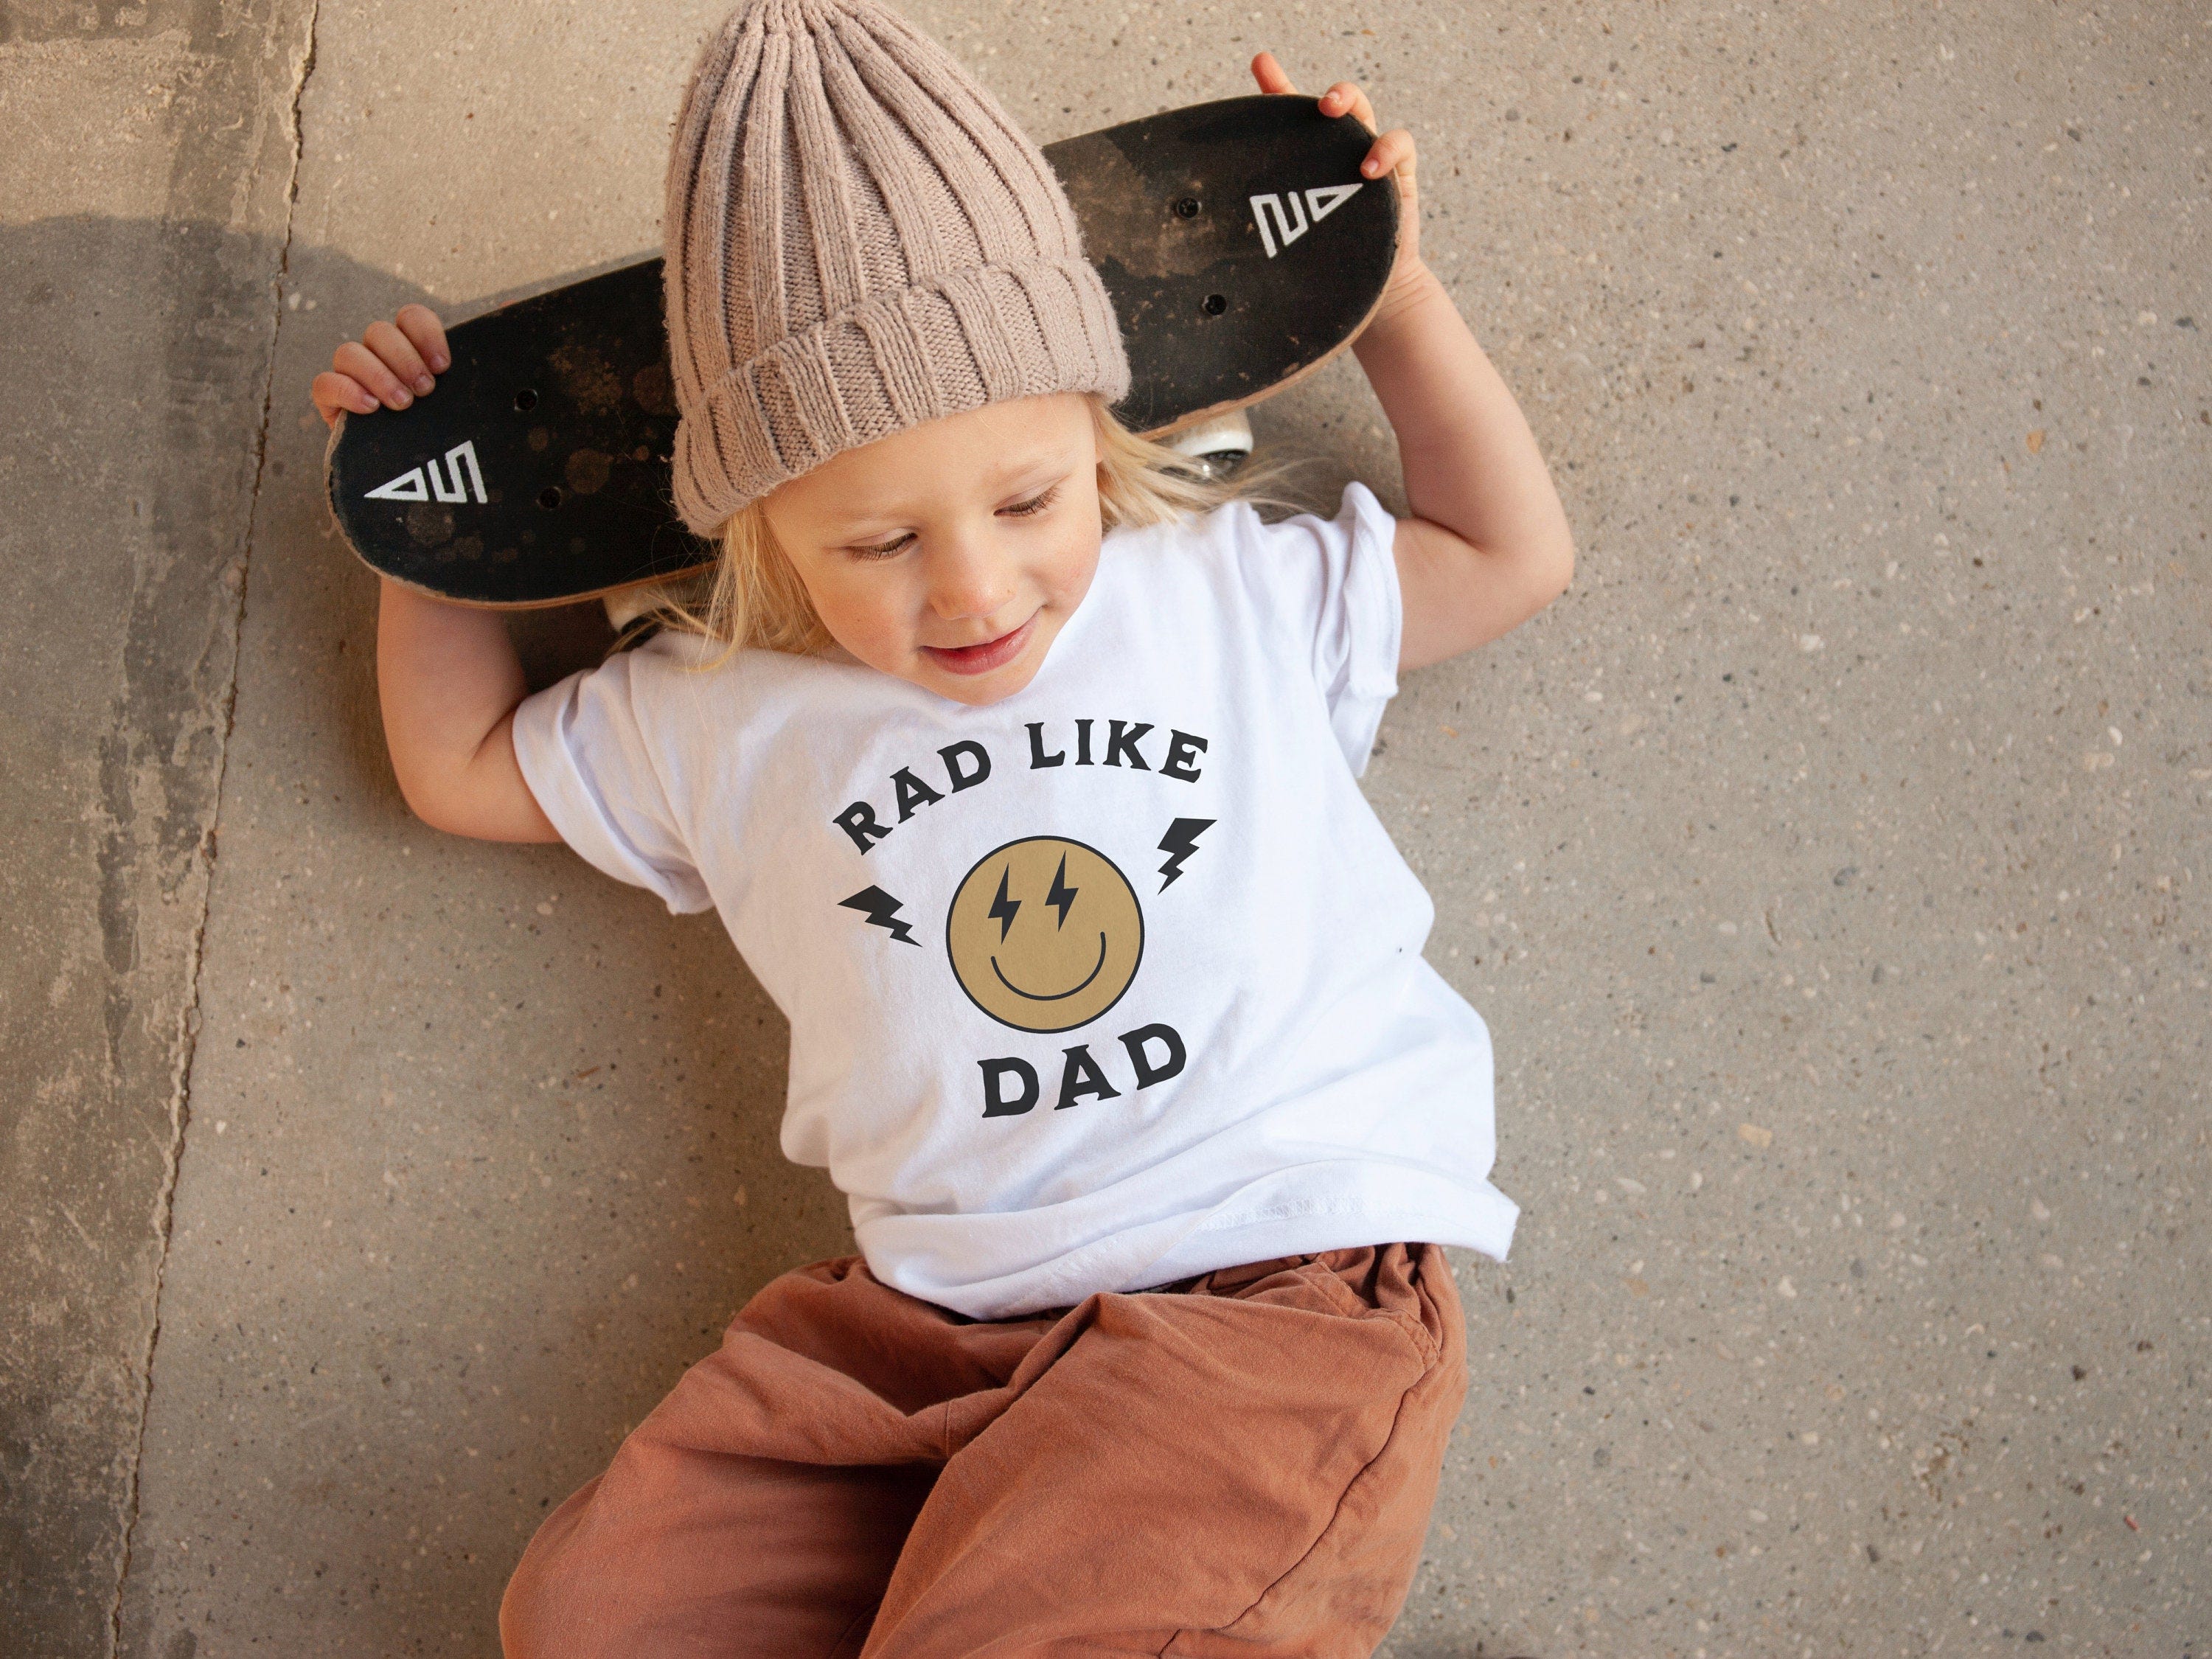 Rad like Dad Shirt -  Fathers Day Gift - Father Son Shirt - Kids Fathers Day shirt